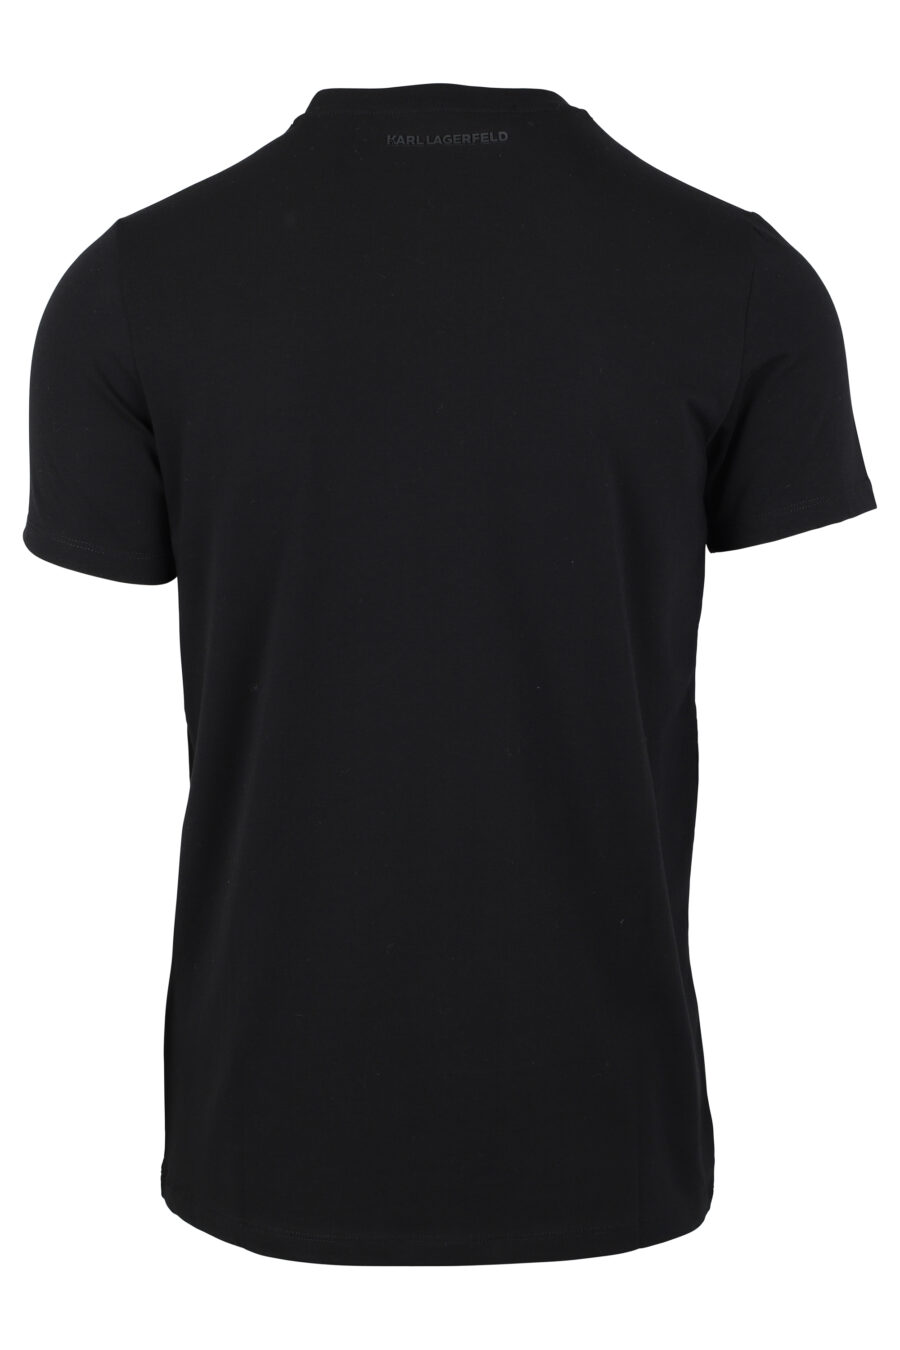 Black T-shirt with "karl" maxilogo in orange silhouette - IMG 4693